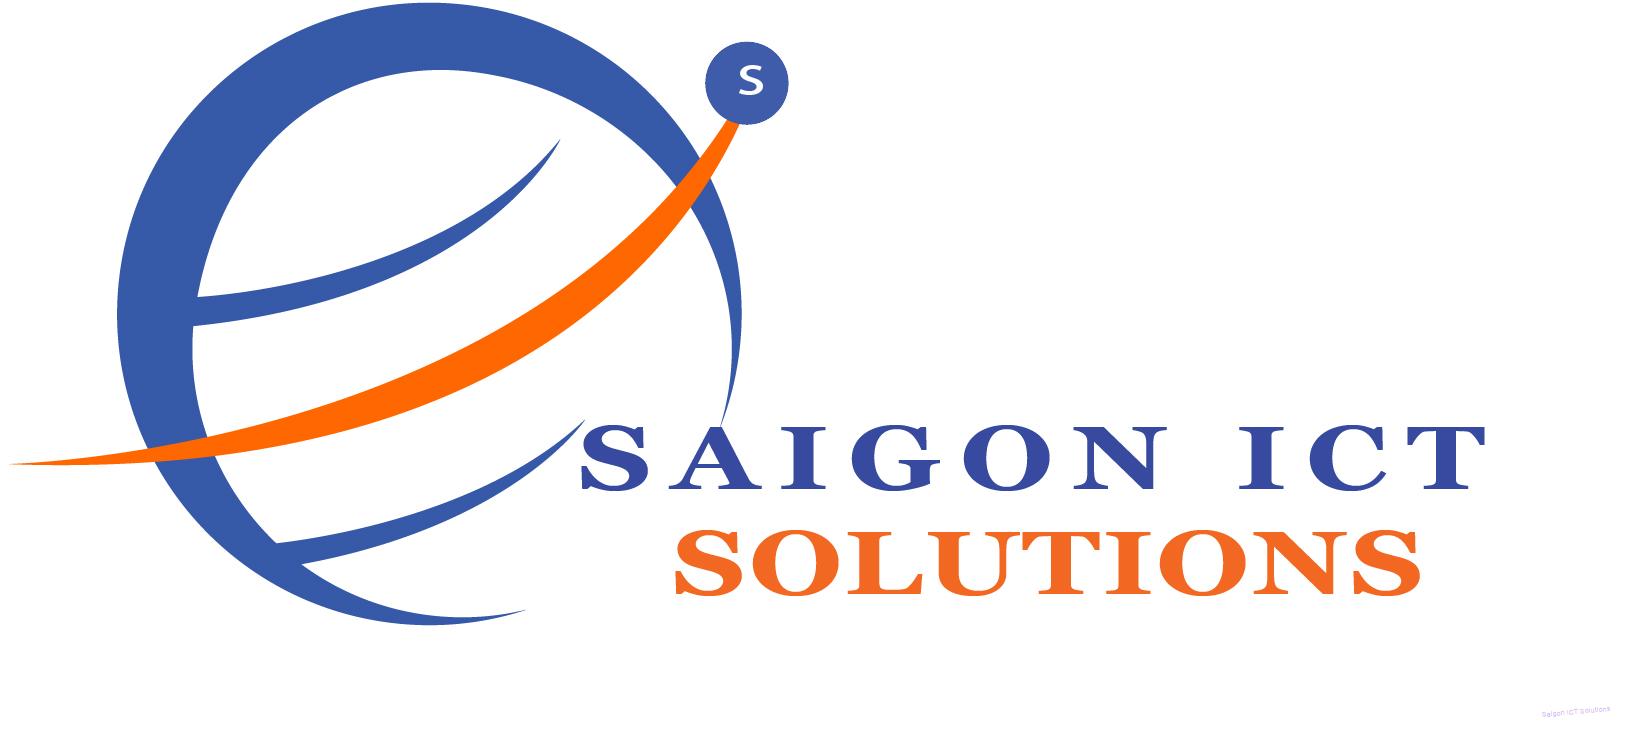 SAIGON ICT CO., LTD